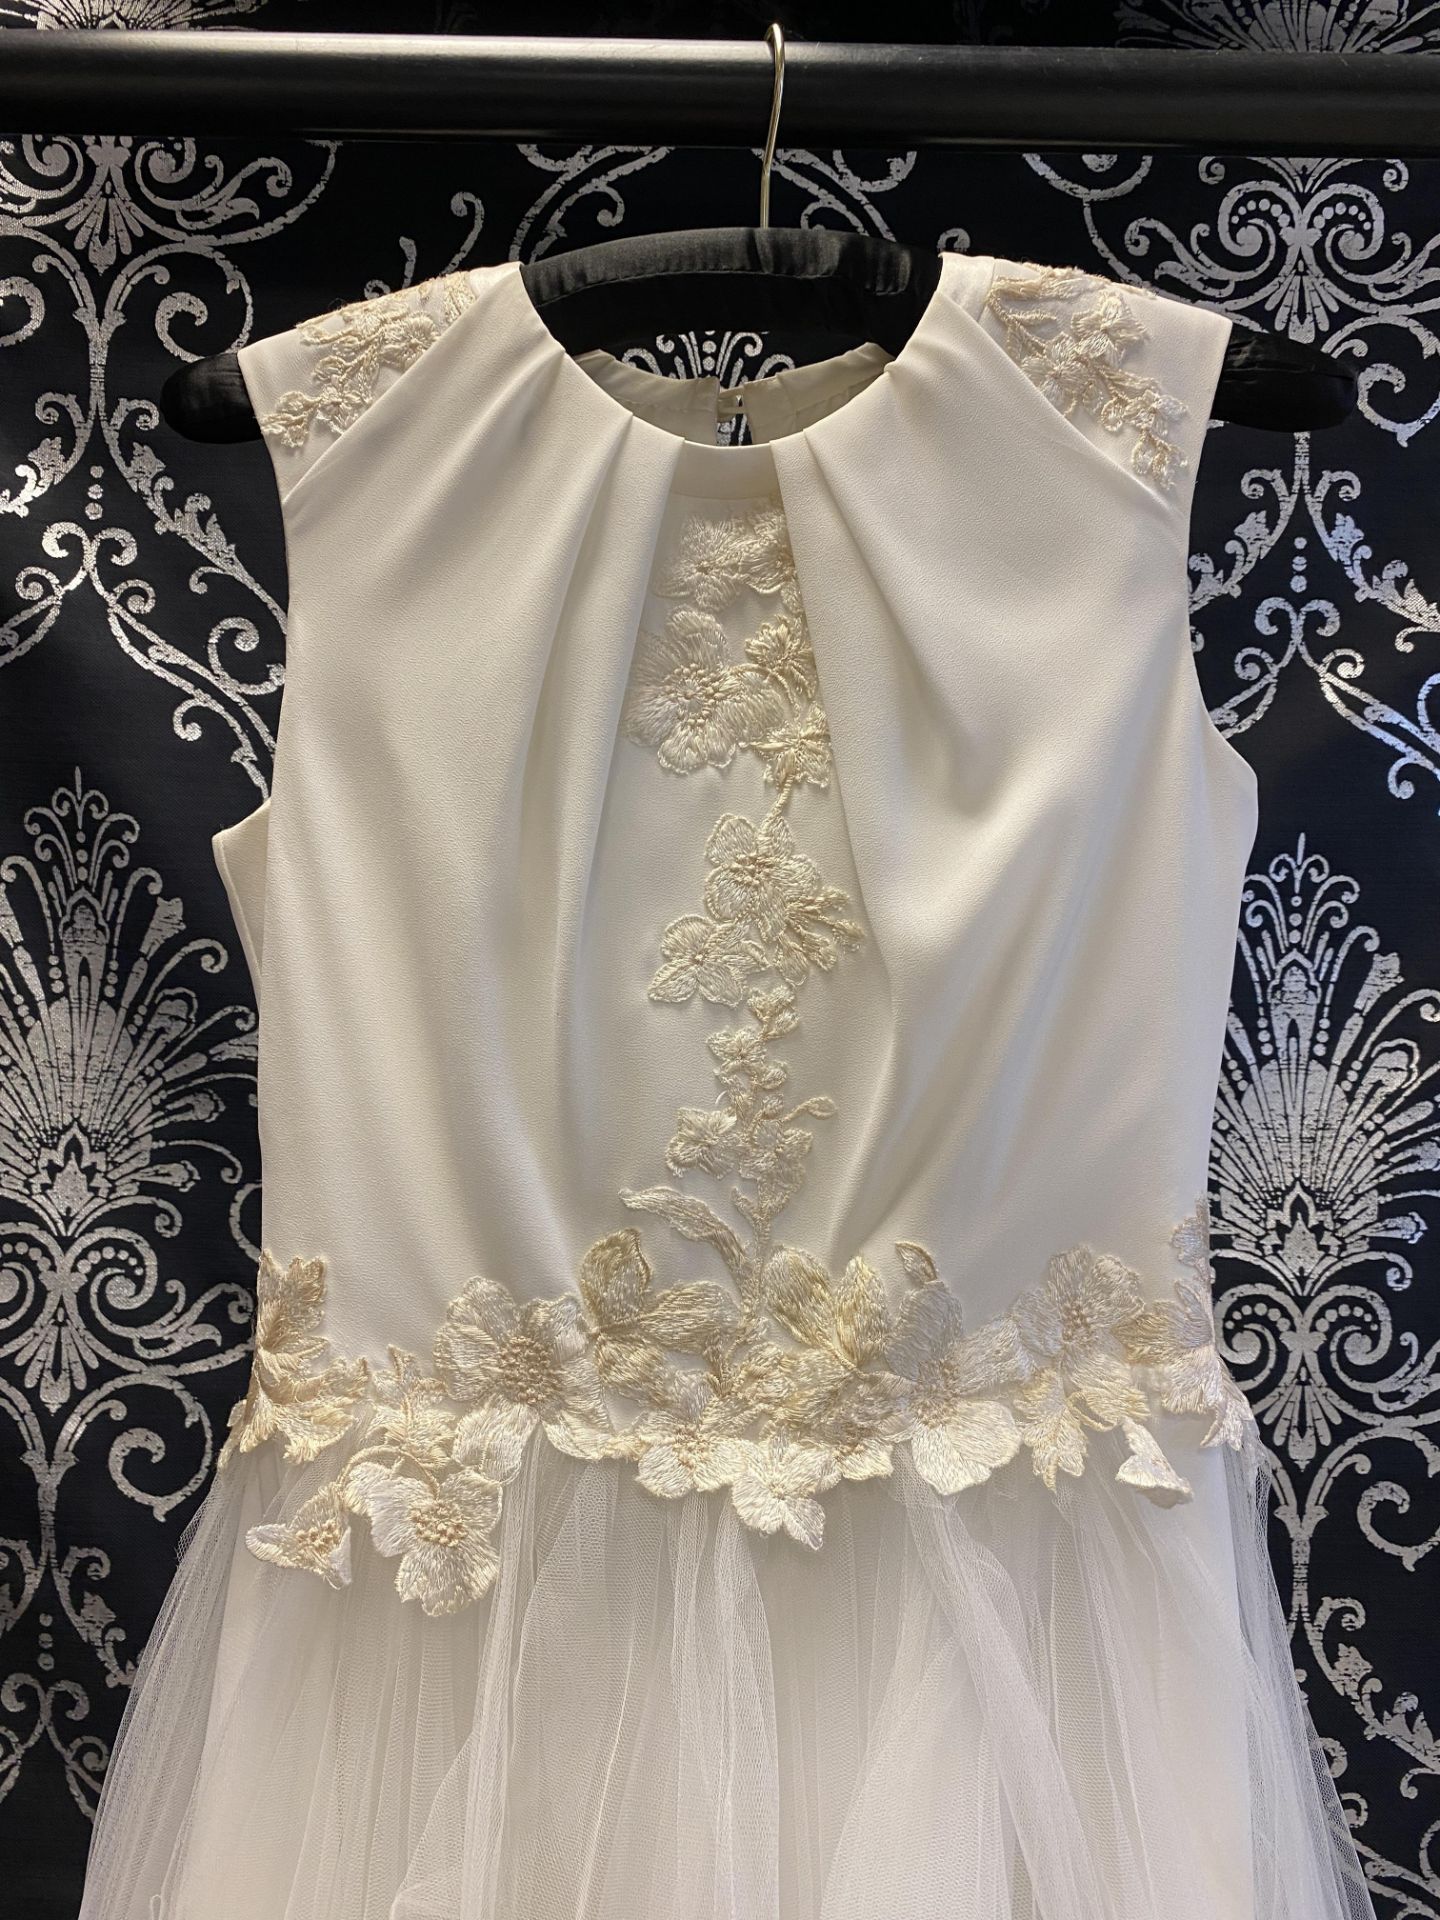 1 x DAVID FIELDEN '8816' Jewel Neck Full Skirted Designer Wedding Dress RRP £2,850 UK 12 - Image 3 of 9